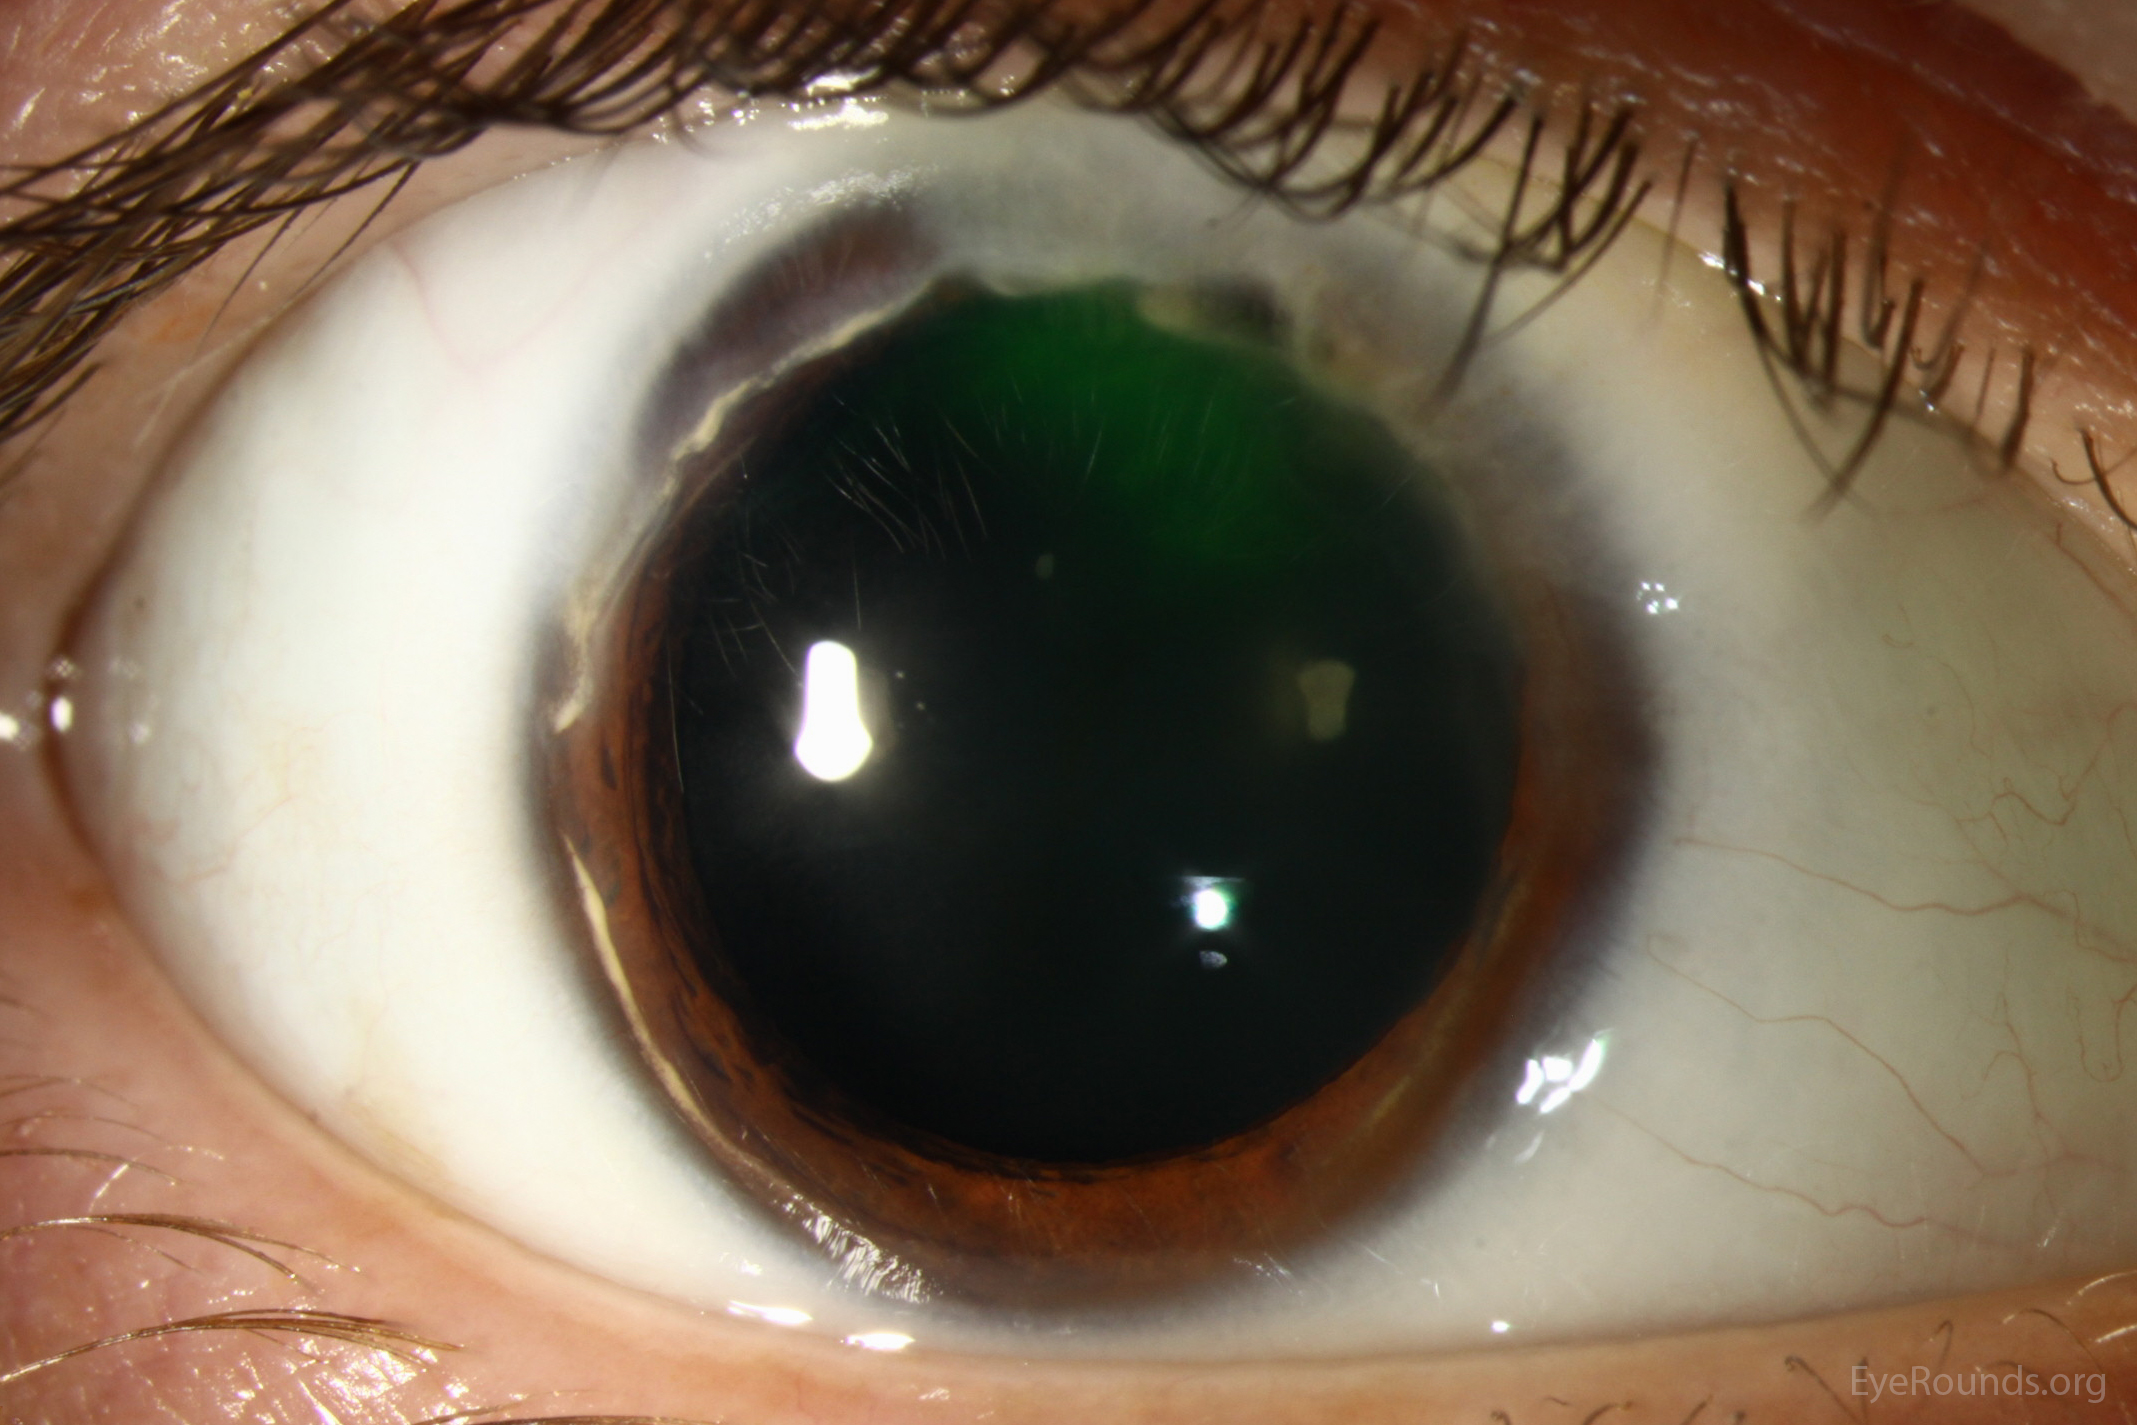  External view of eye 